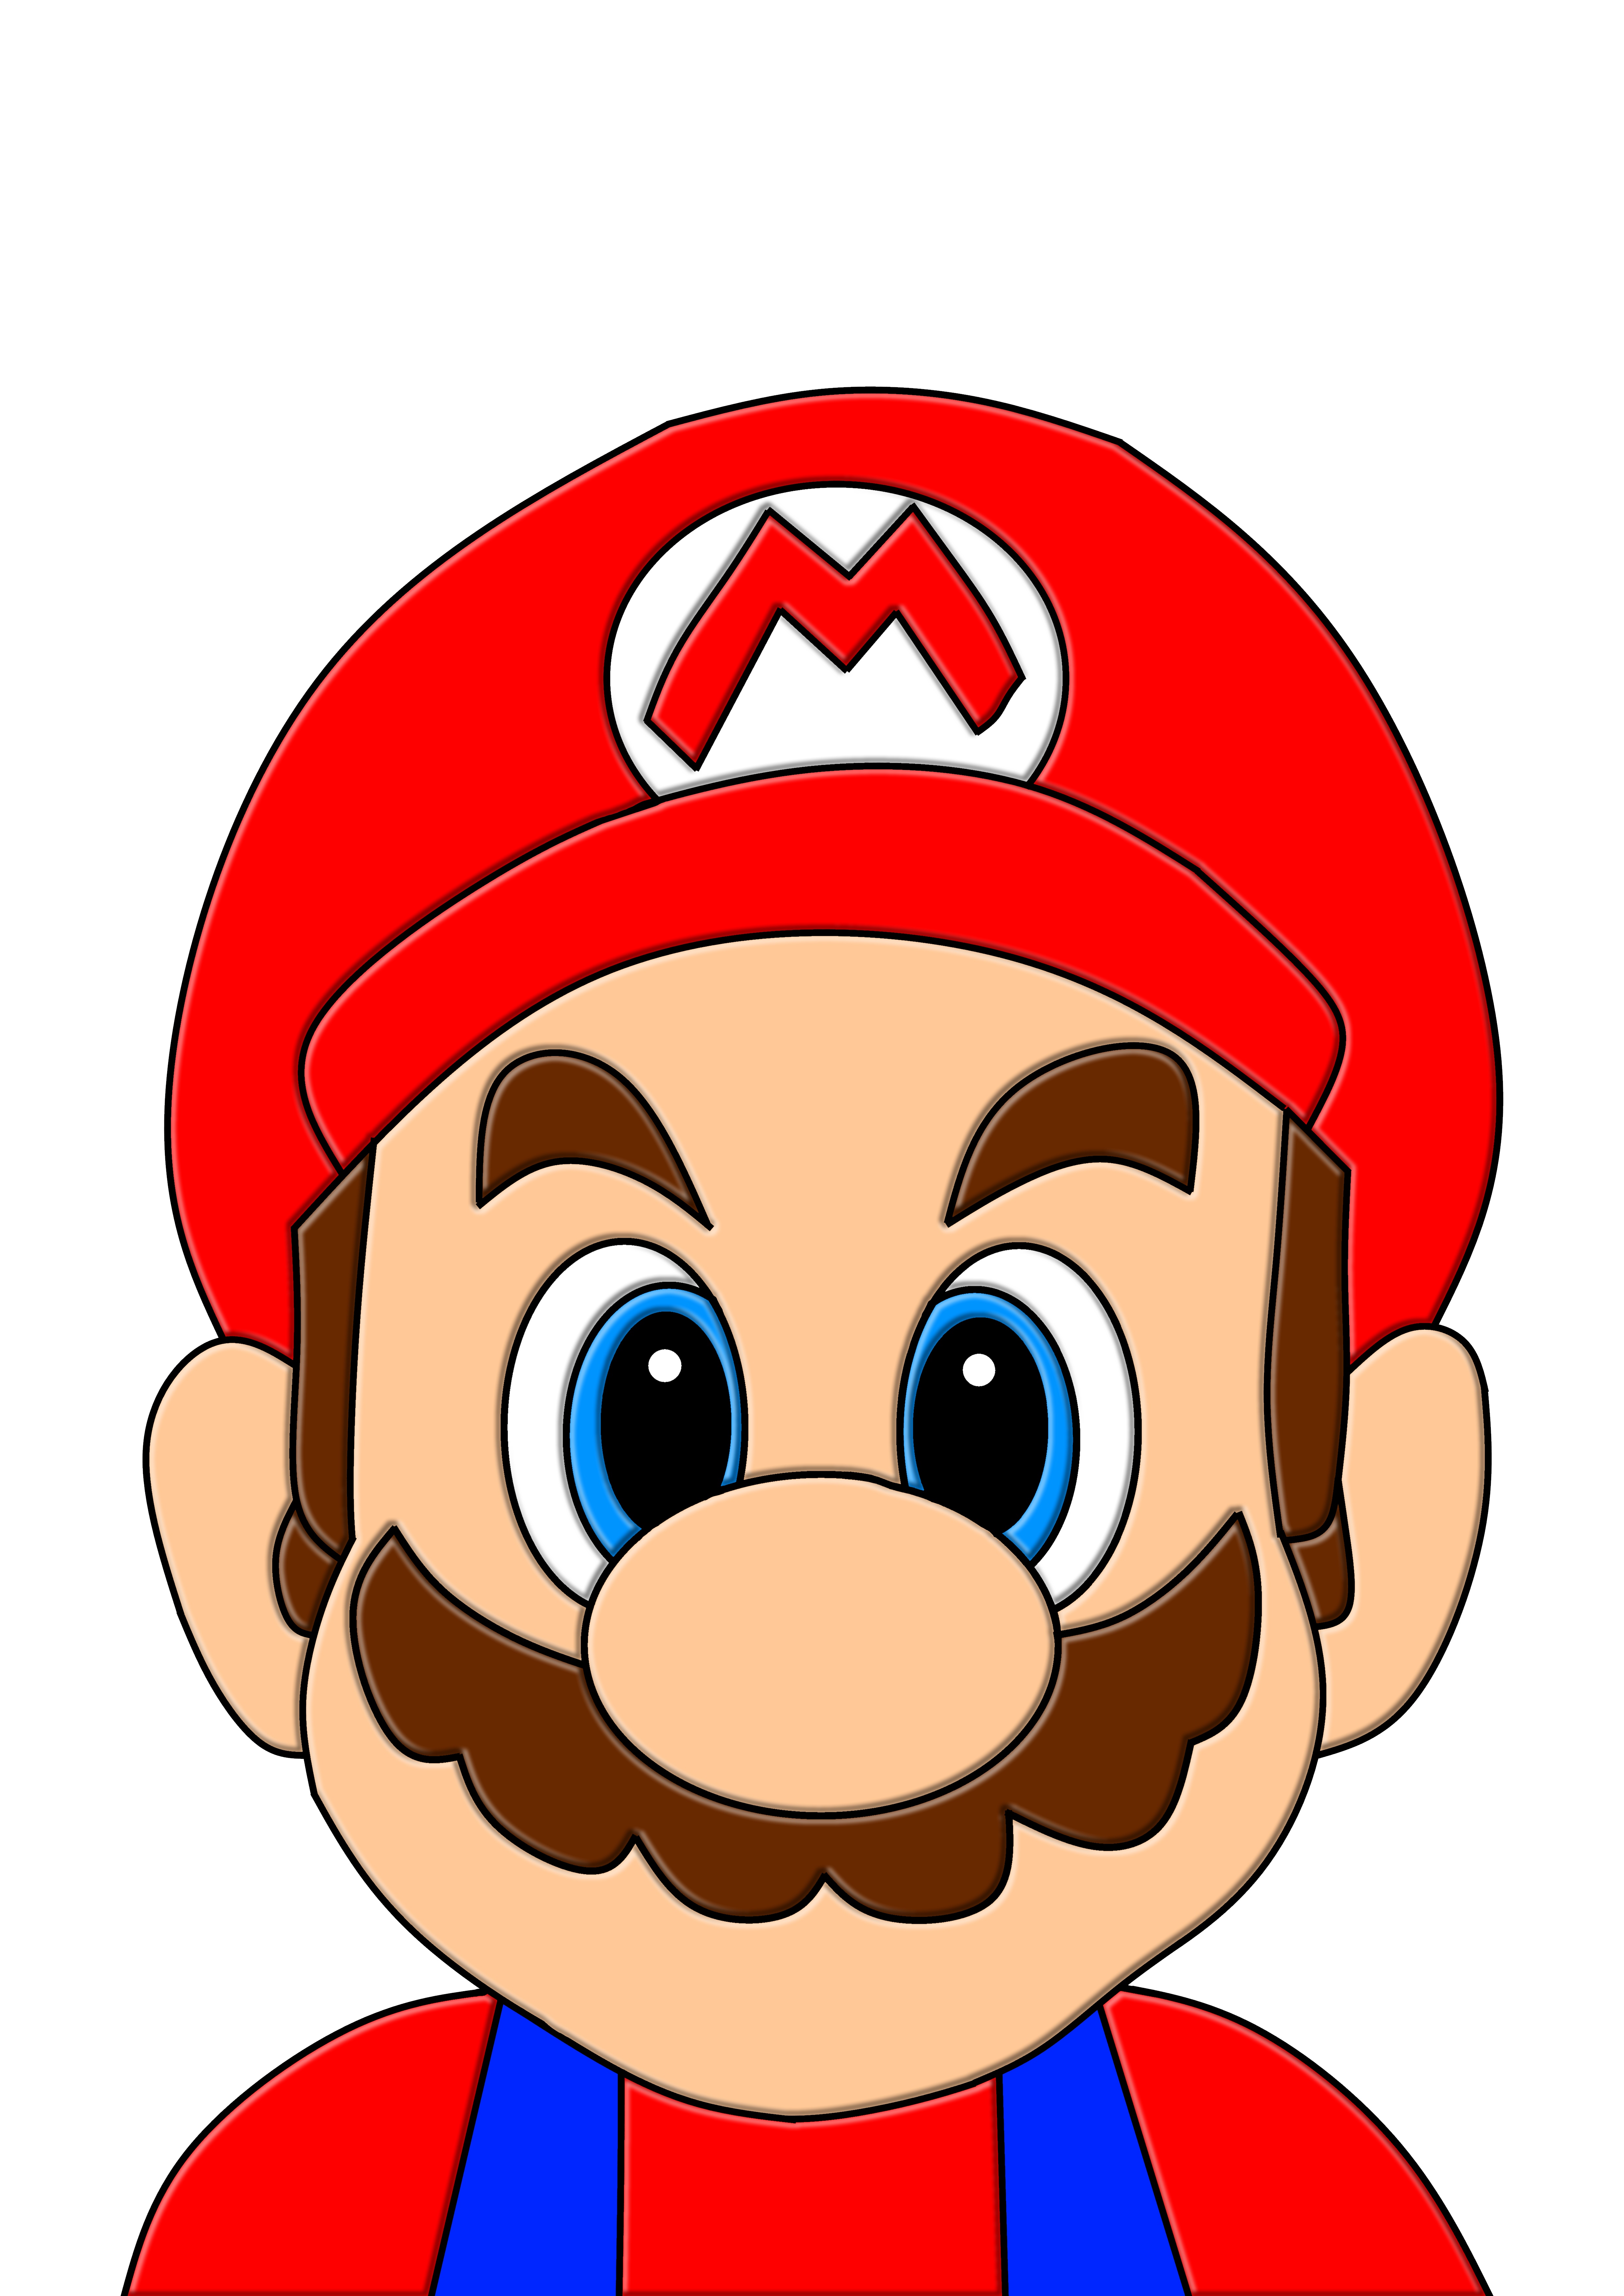 Dessin Mario avant et après – Valentin